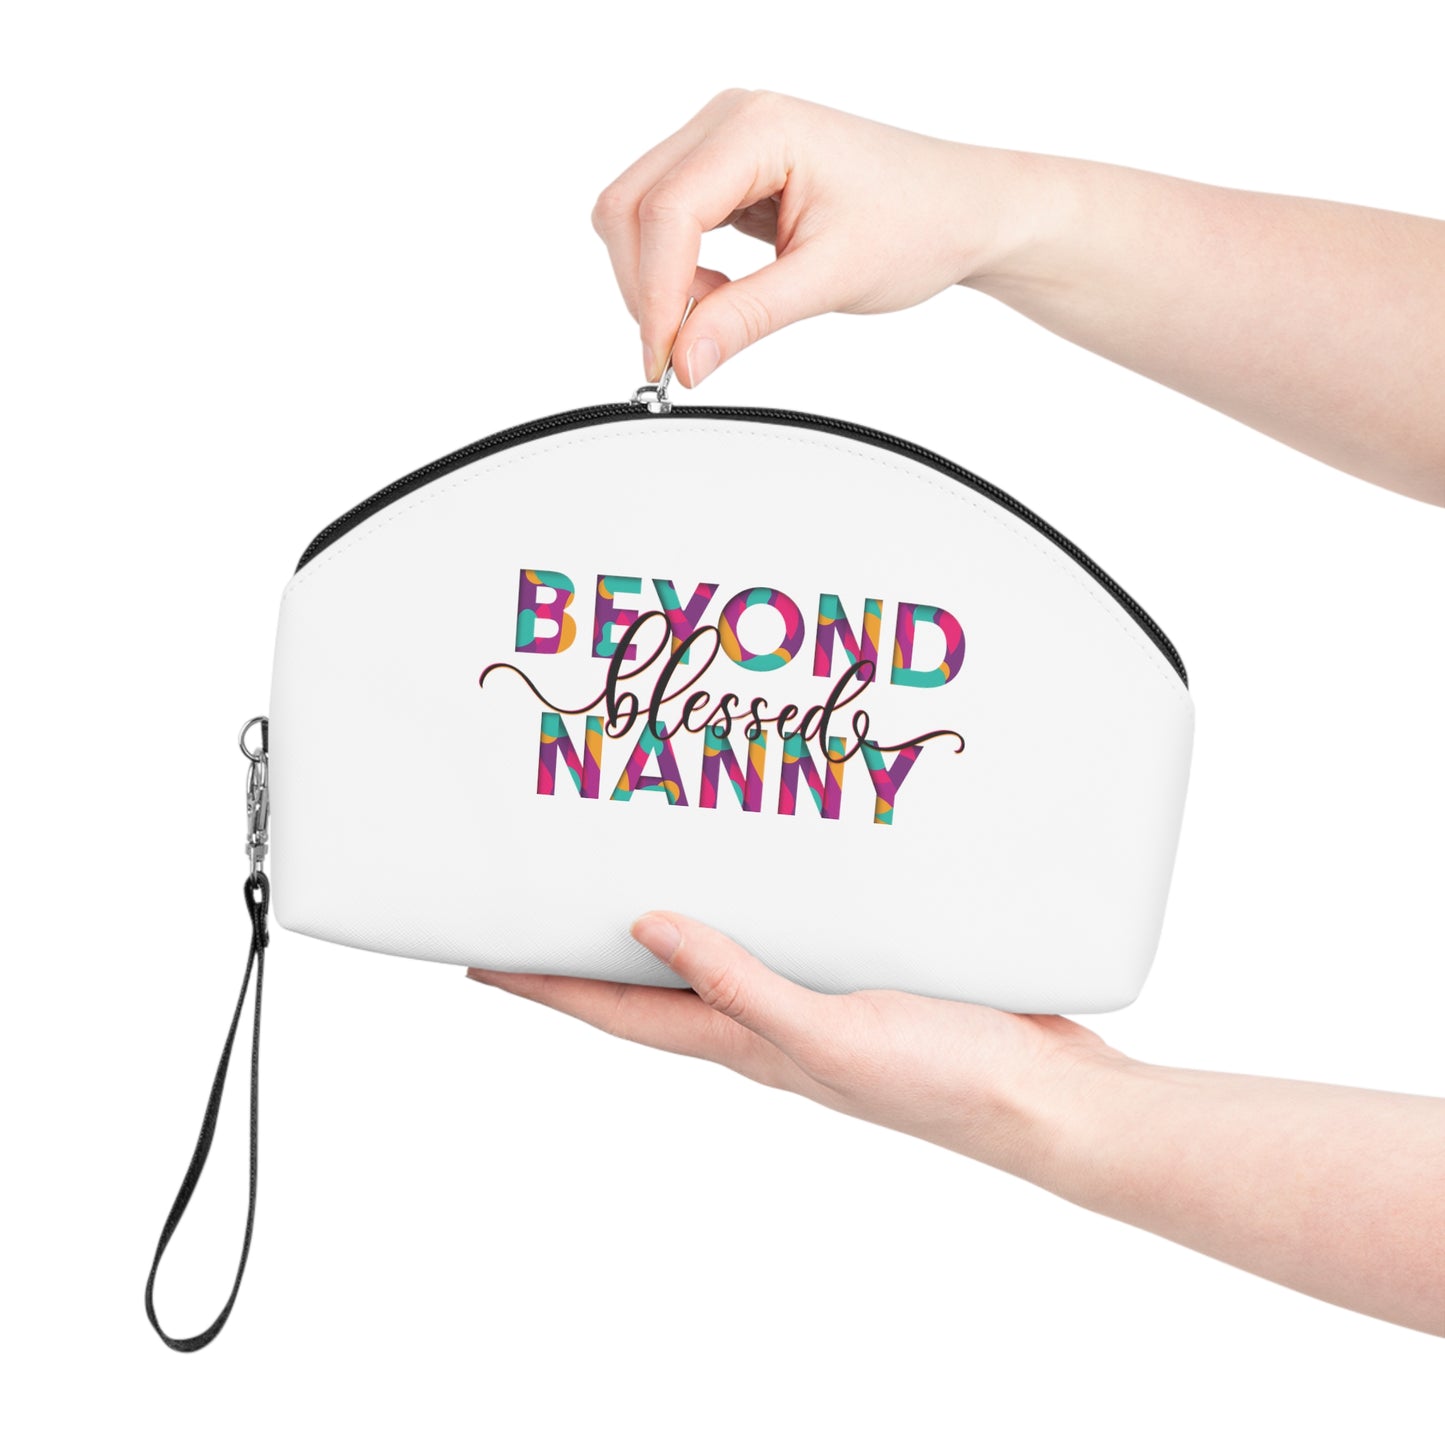 Beyond Blessed Nanny - Makeup Bag